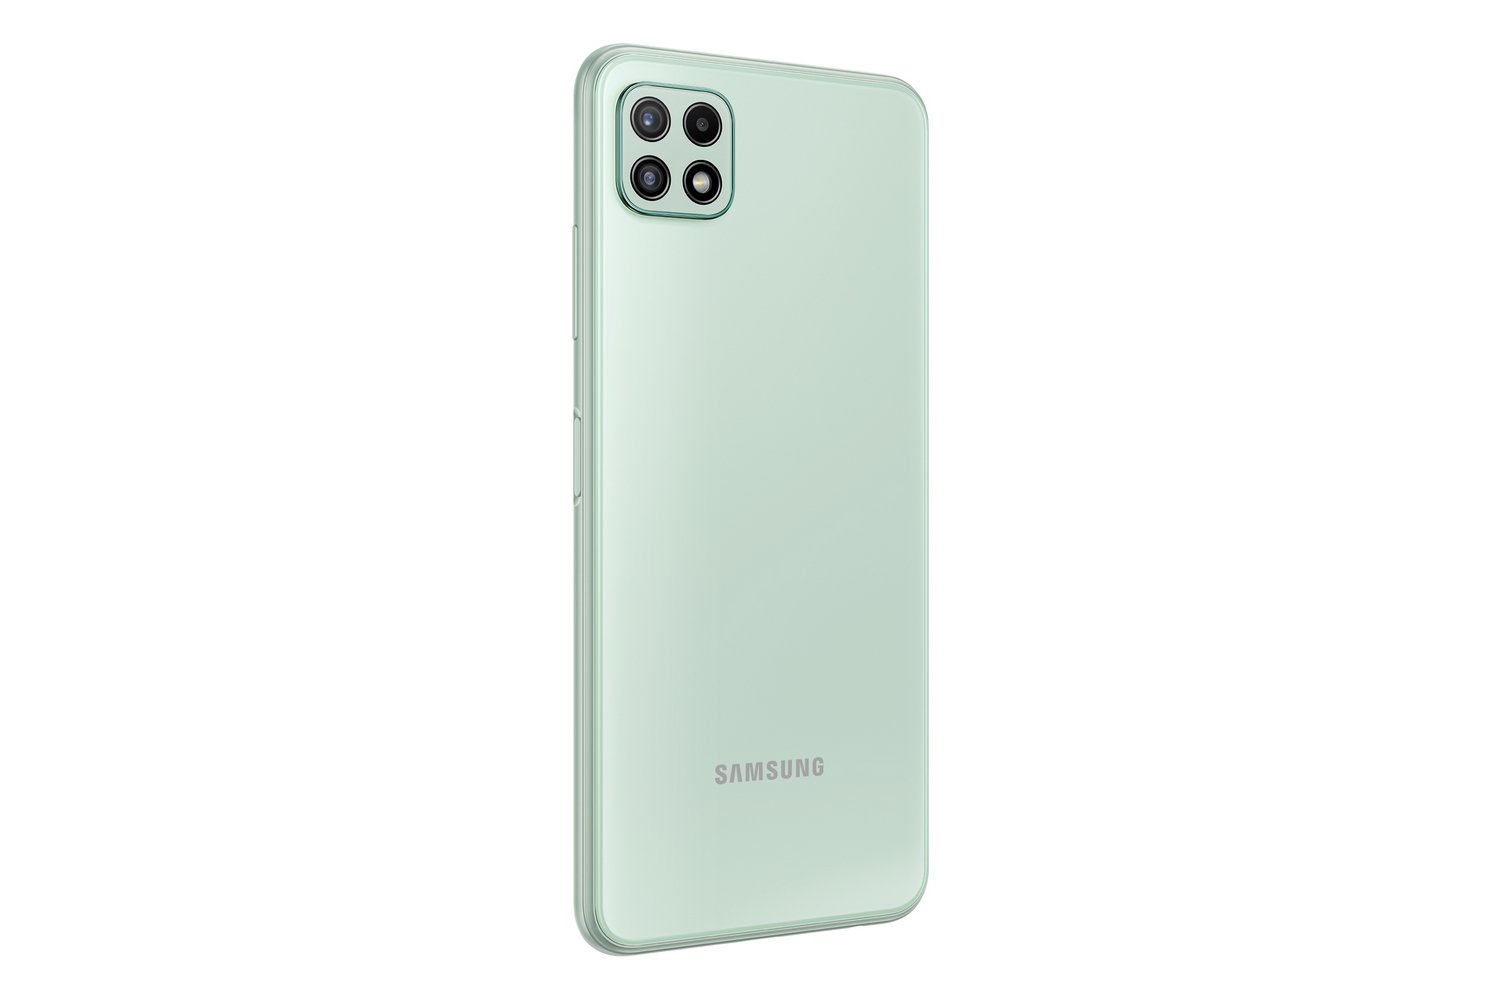 Samsung Galaxy A22 5G specs, review, release date - PhonesData